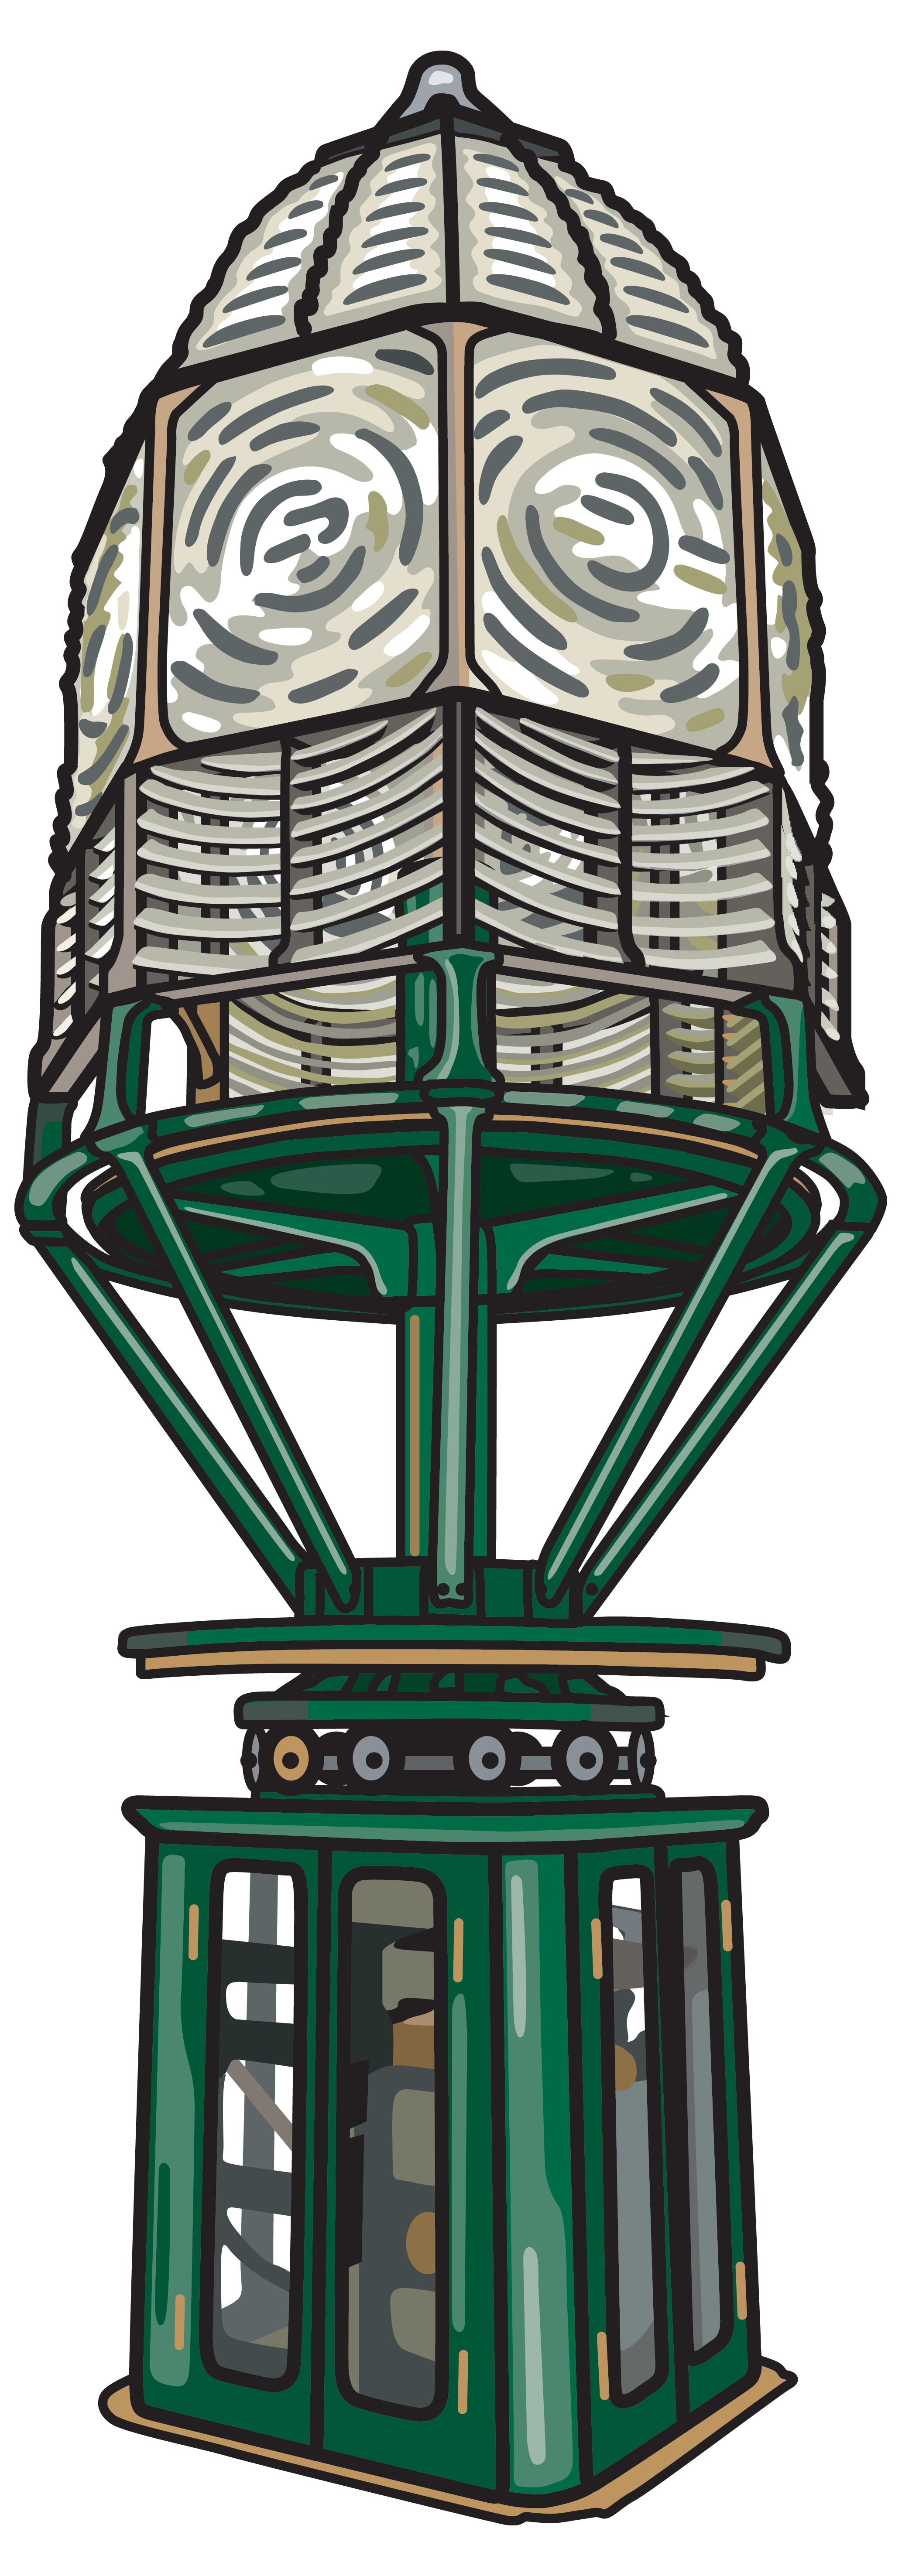 Illustration of a lighthouse lens on a green base